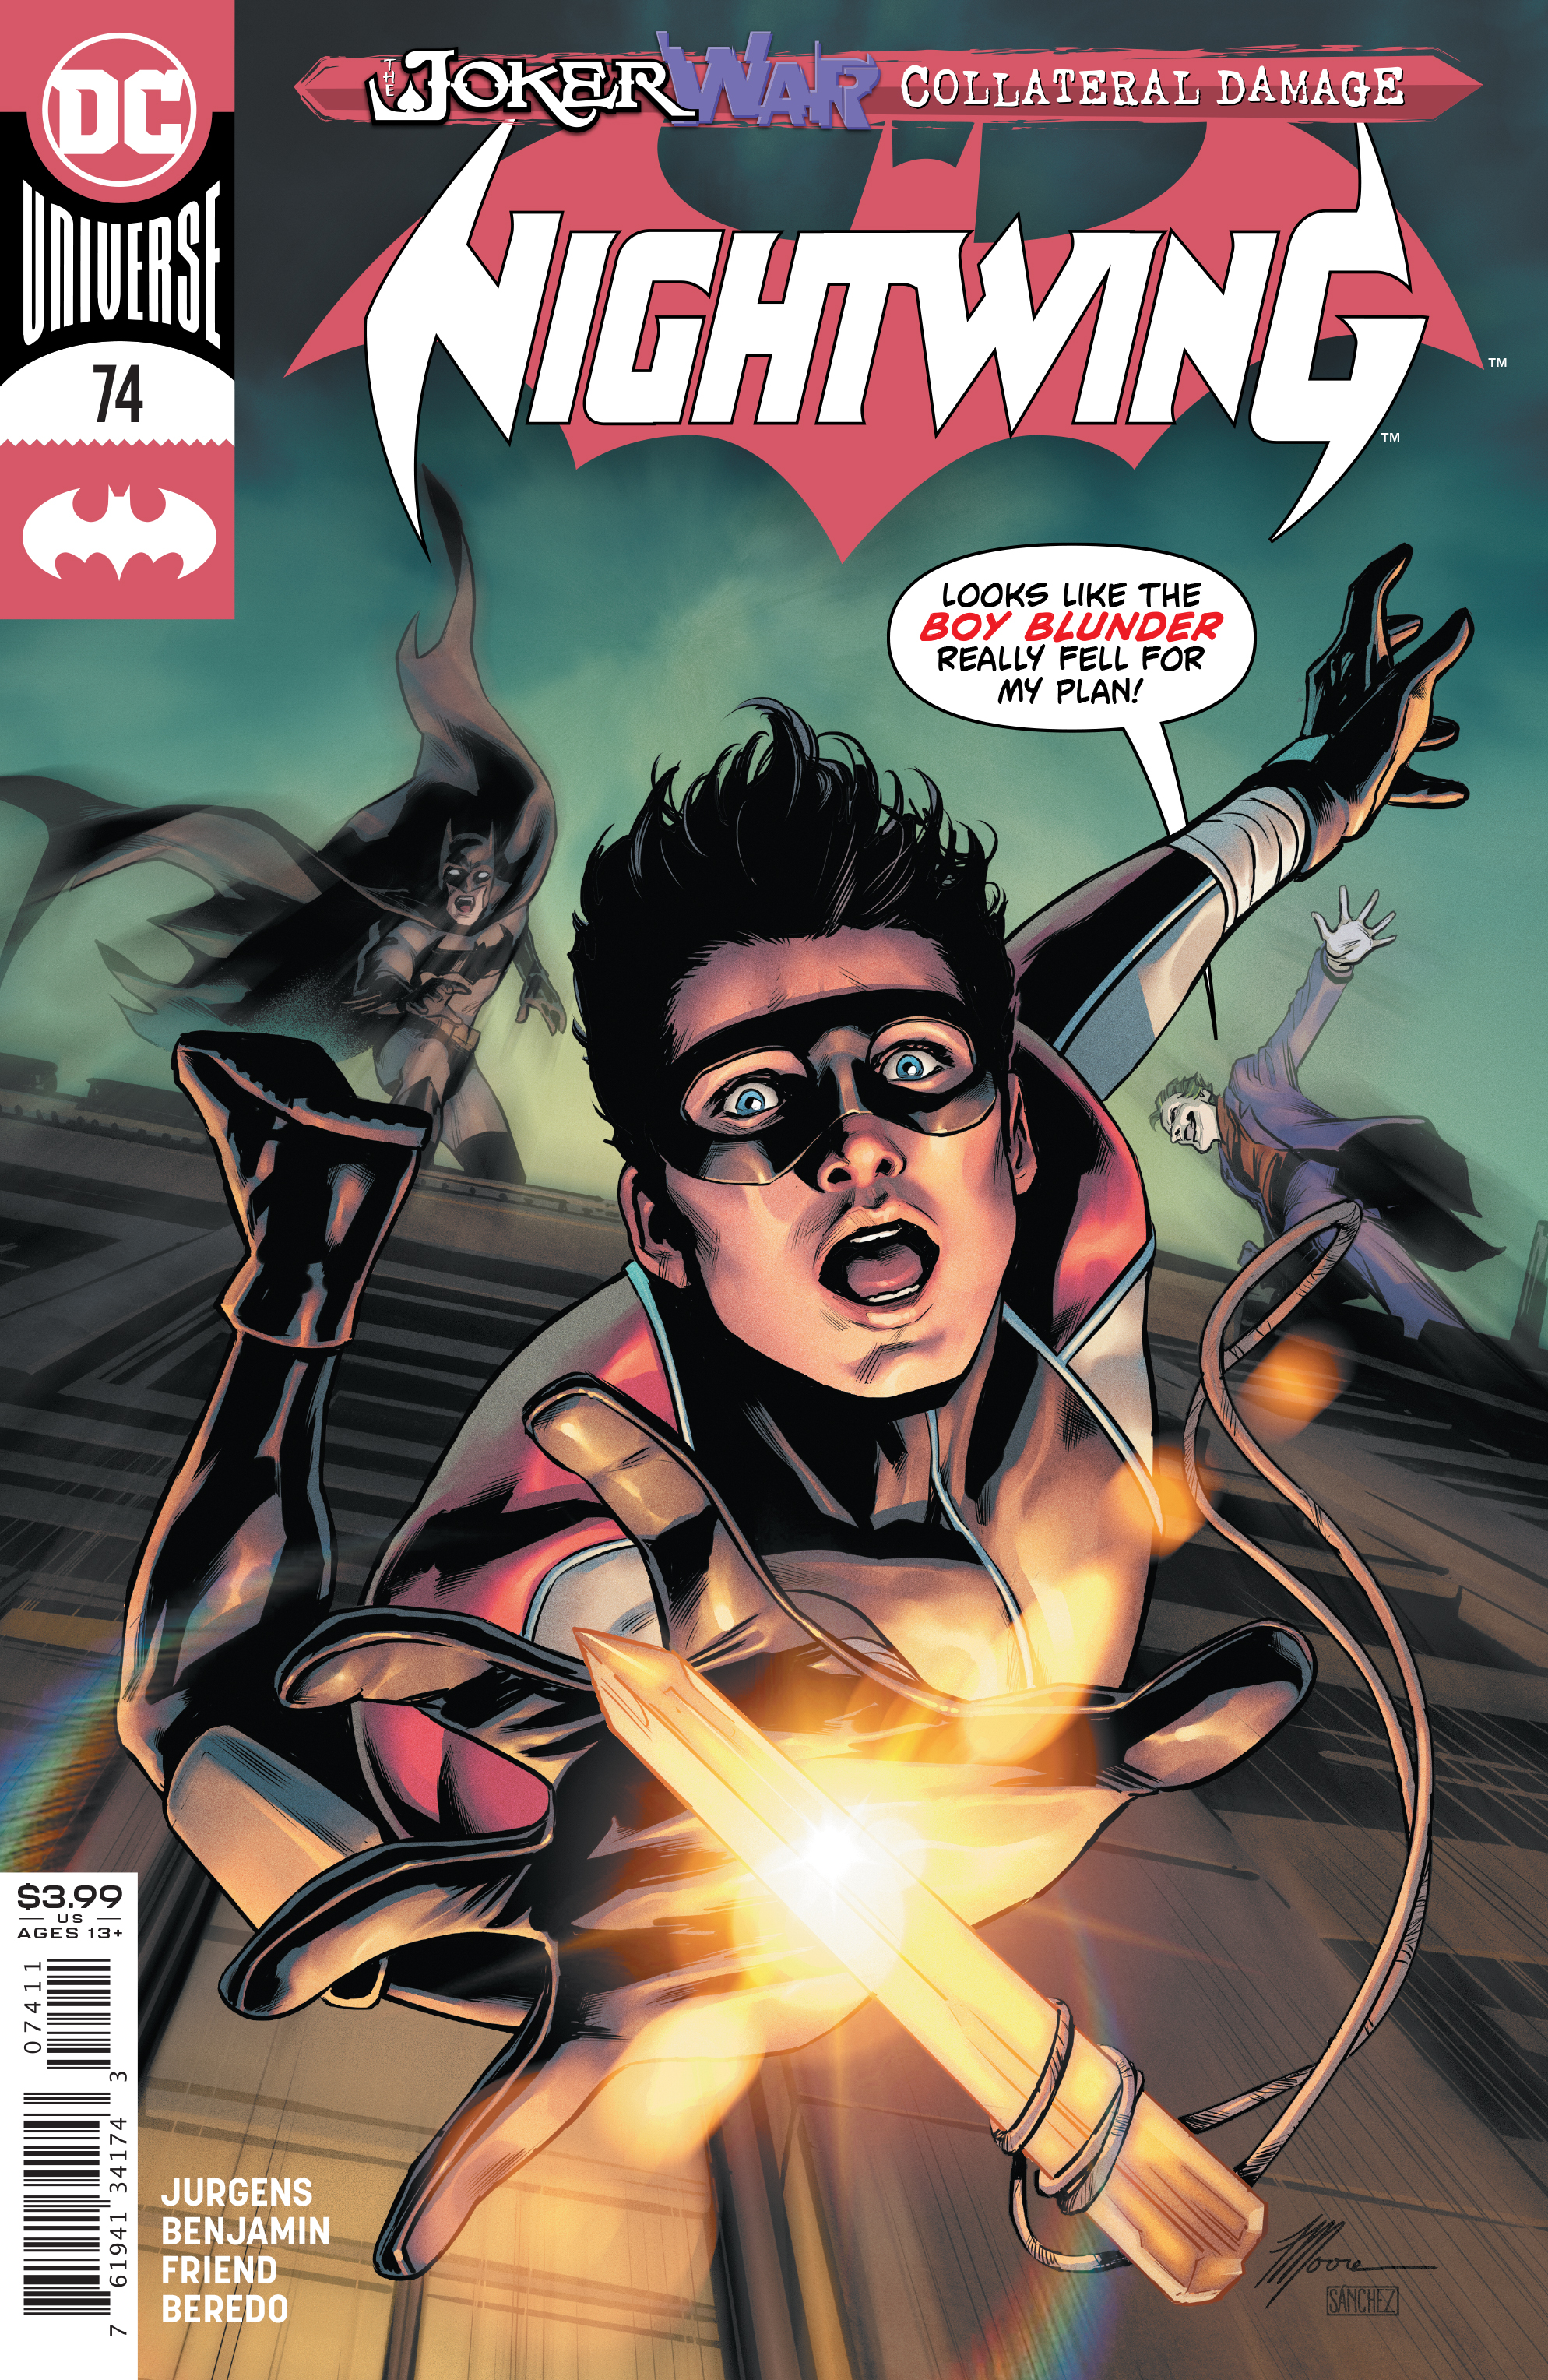 Nightwing #74 Cover A Travis Moore (Joker War) (2016)